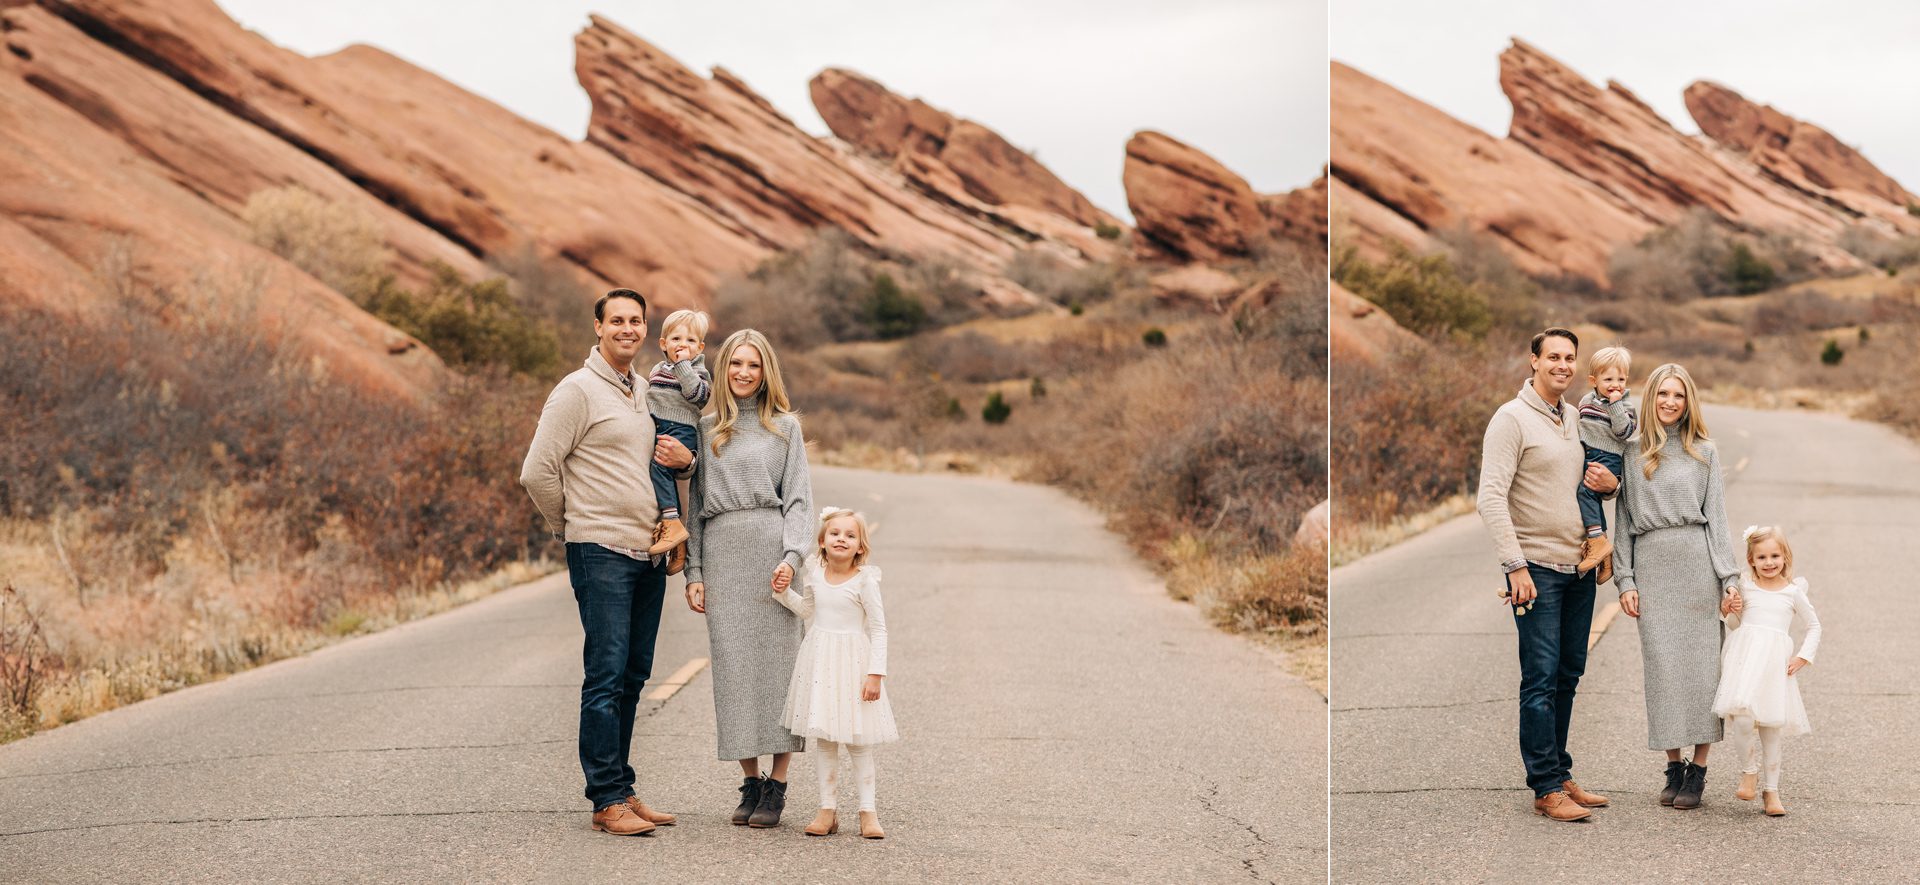 Red Rocks photography, colorado family photographer